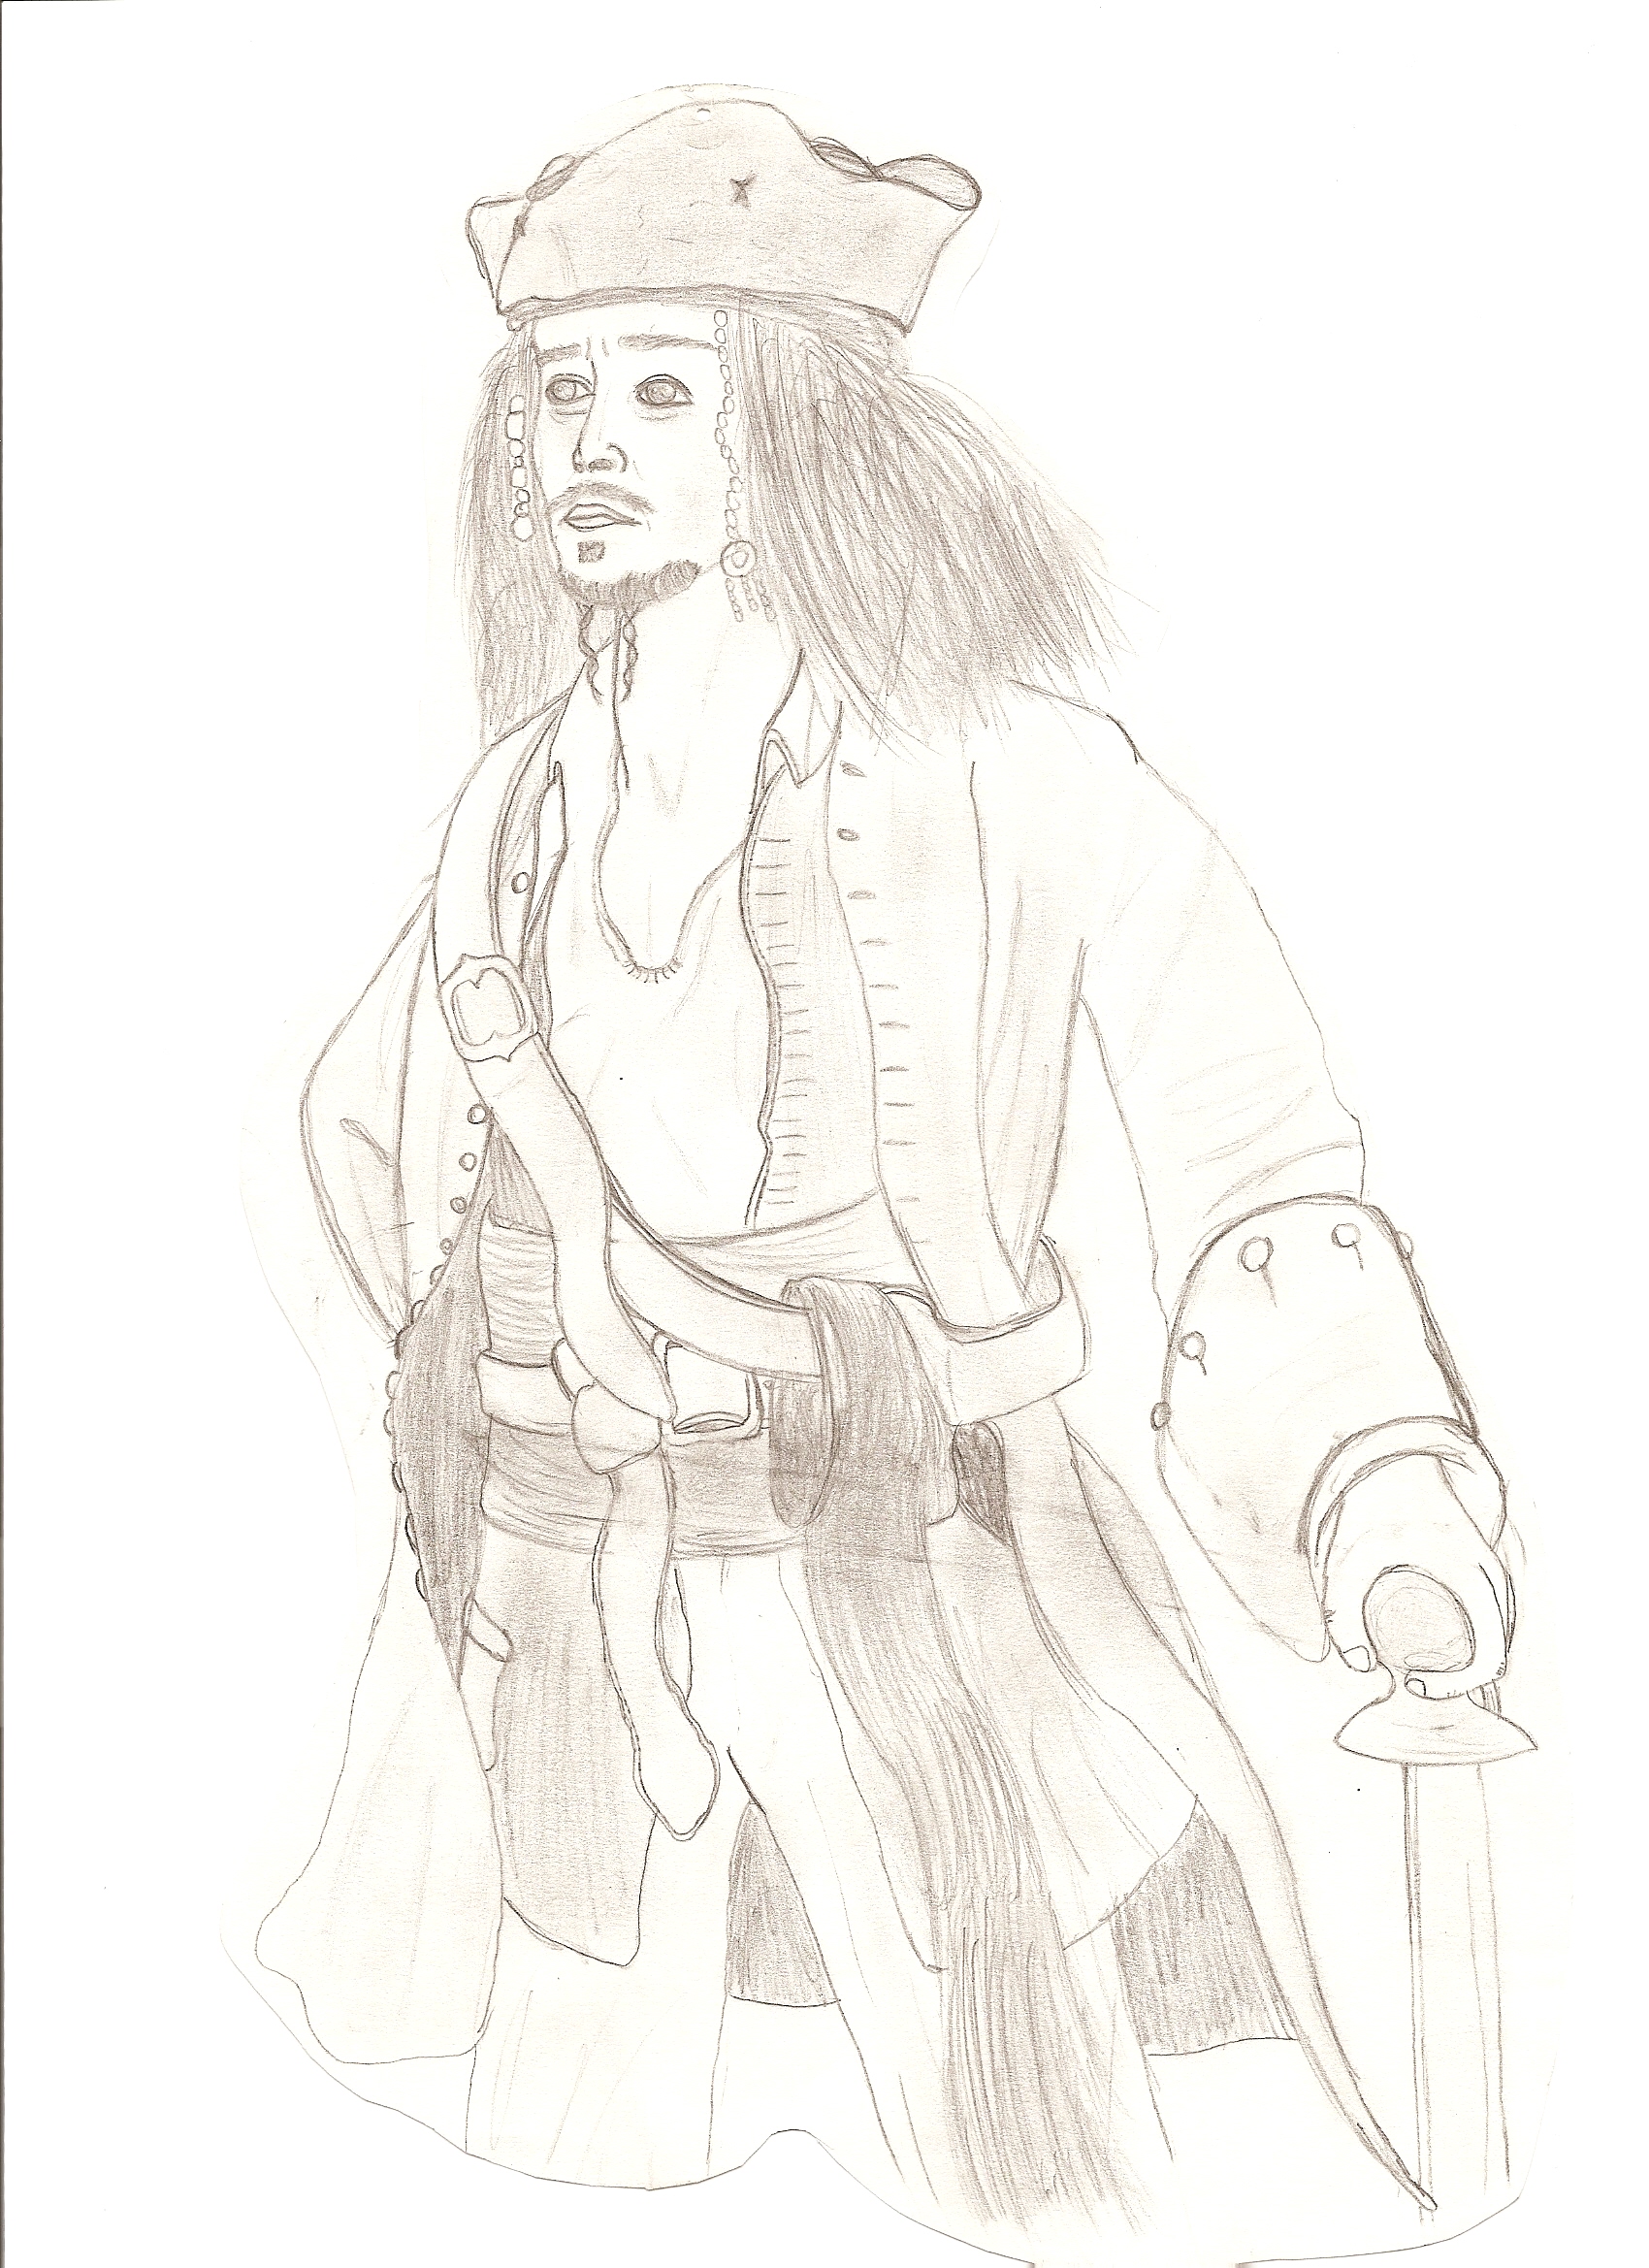 Jack Sparrow by megan7139212